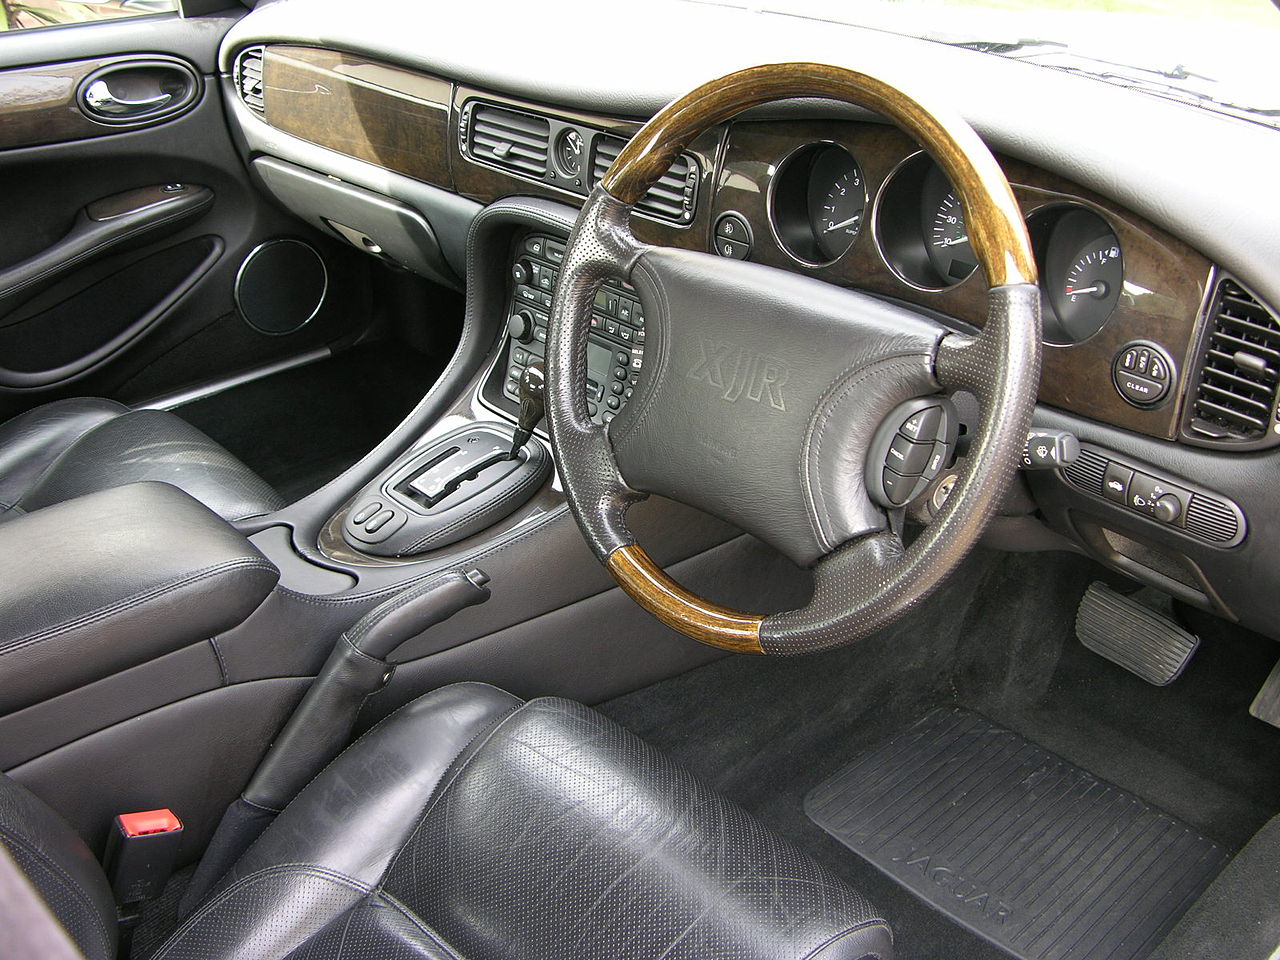 File:Jaguar XJR 1998 - Flickr - The Car Spy (7).jpg - Wikimedia Commons